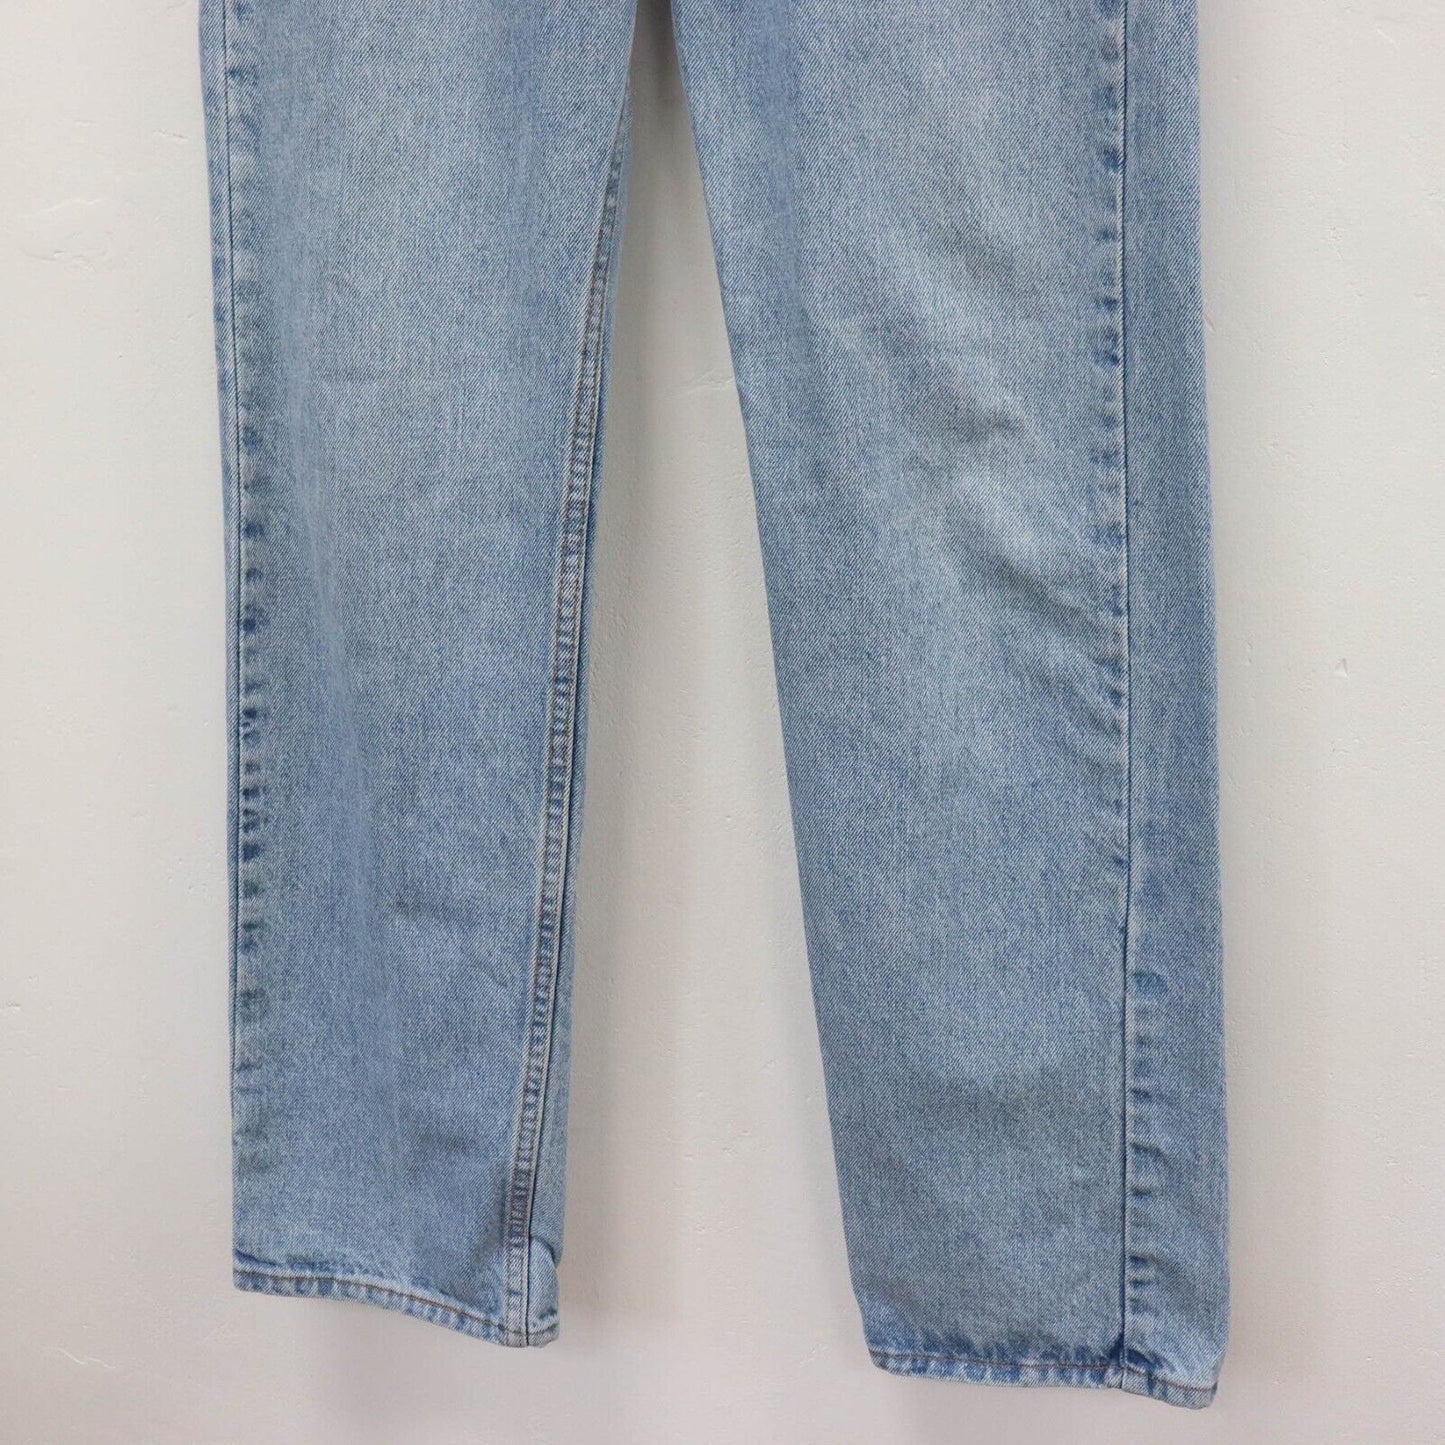 90s Levi’s 505 Straight Leg Jeans W30 L33